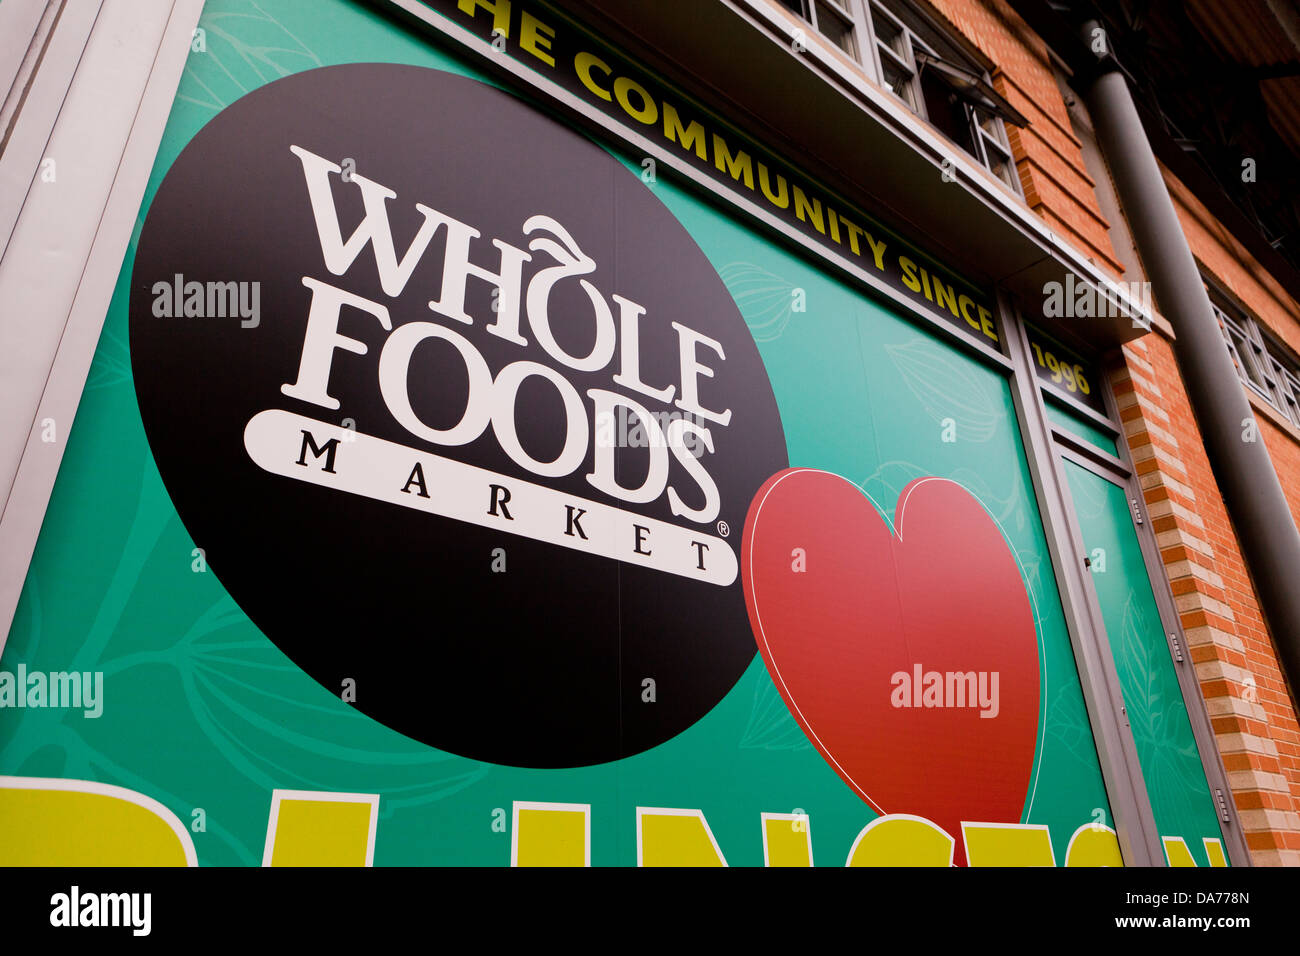 Whole Foods Market sign Stock Photo